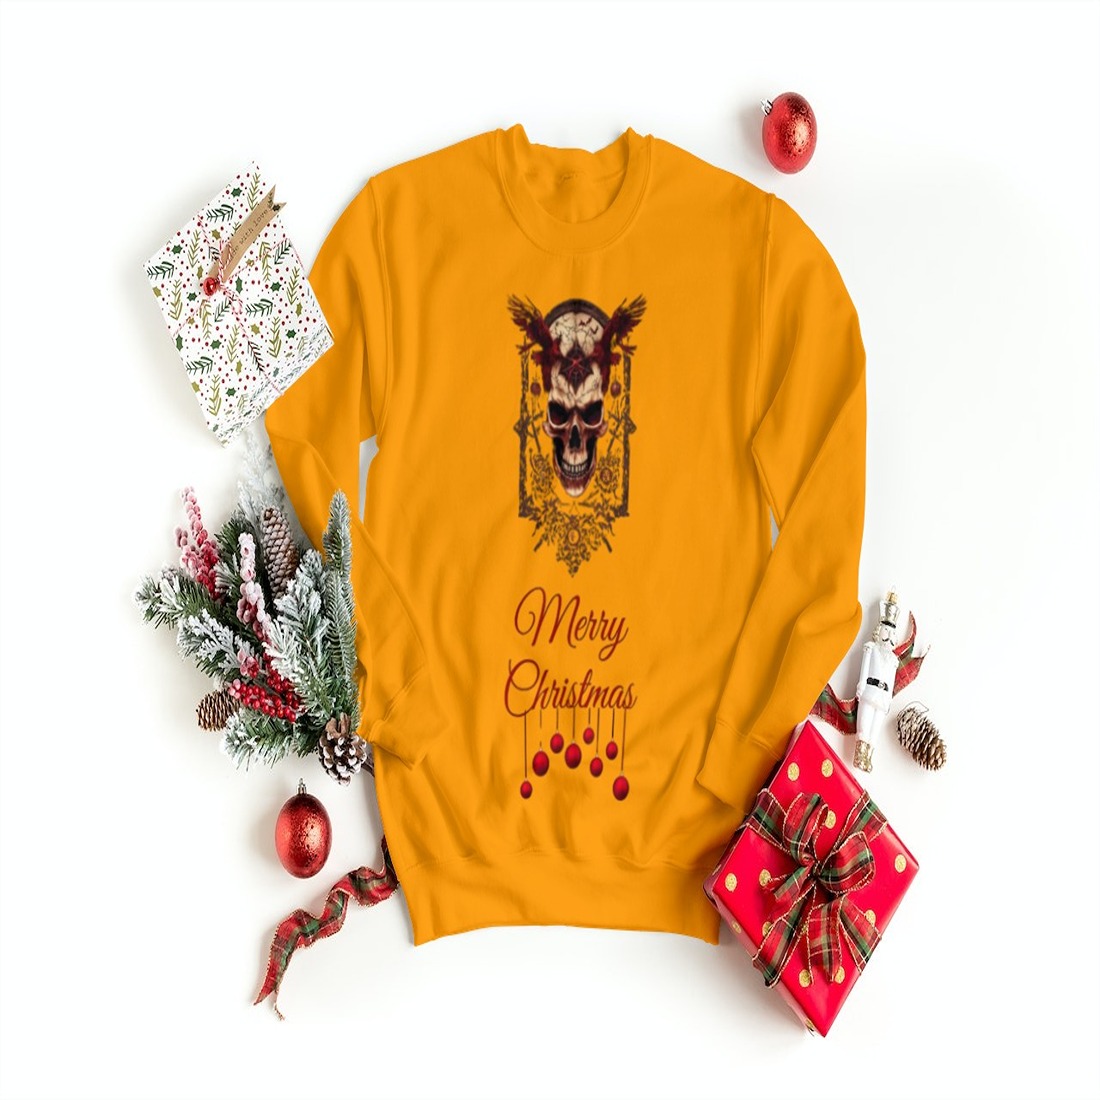 Merry Christmas - Skulls T-shirt Design Template cover image.